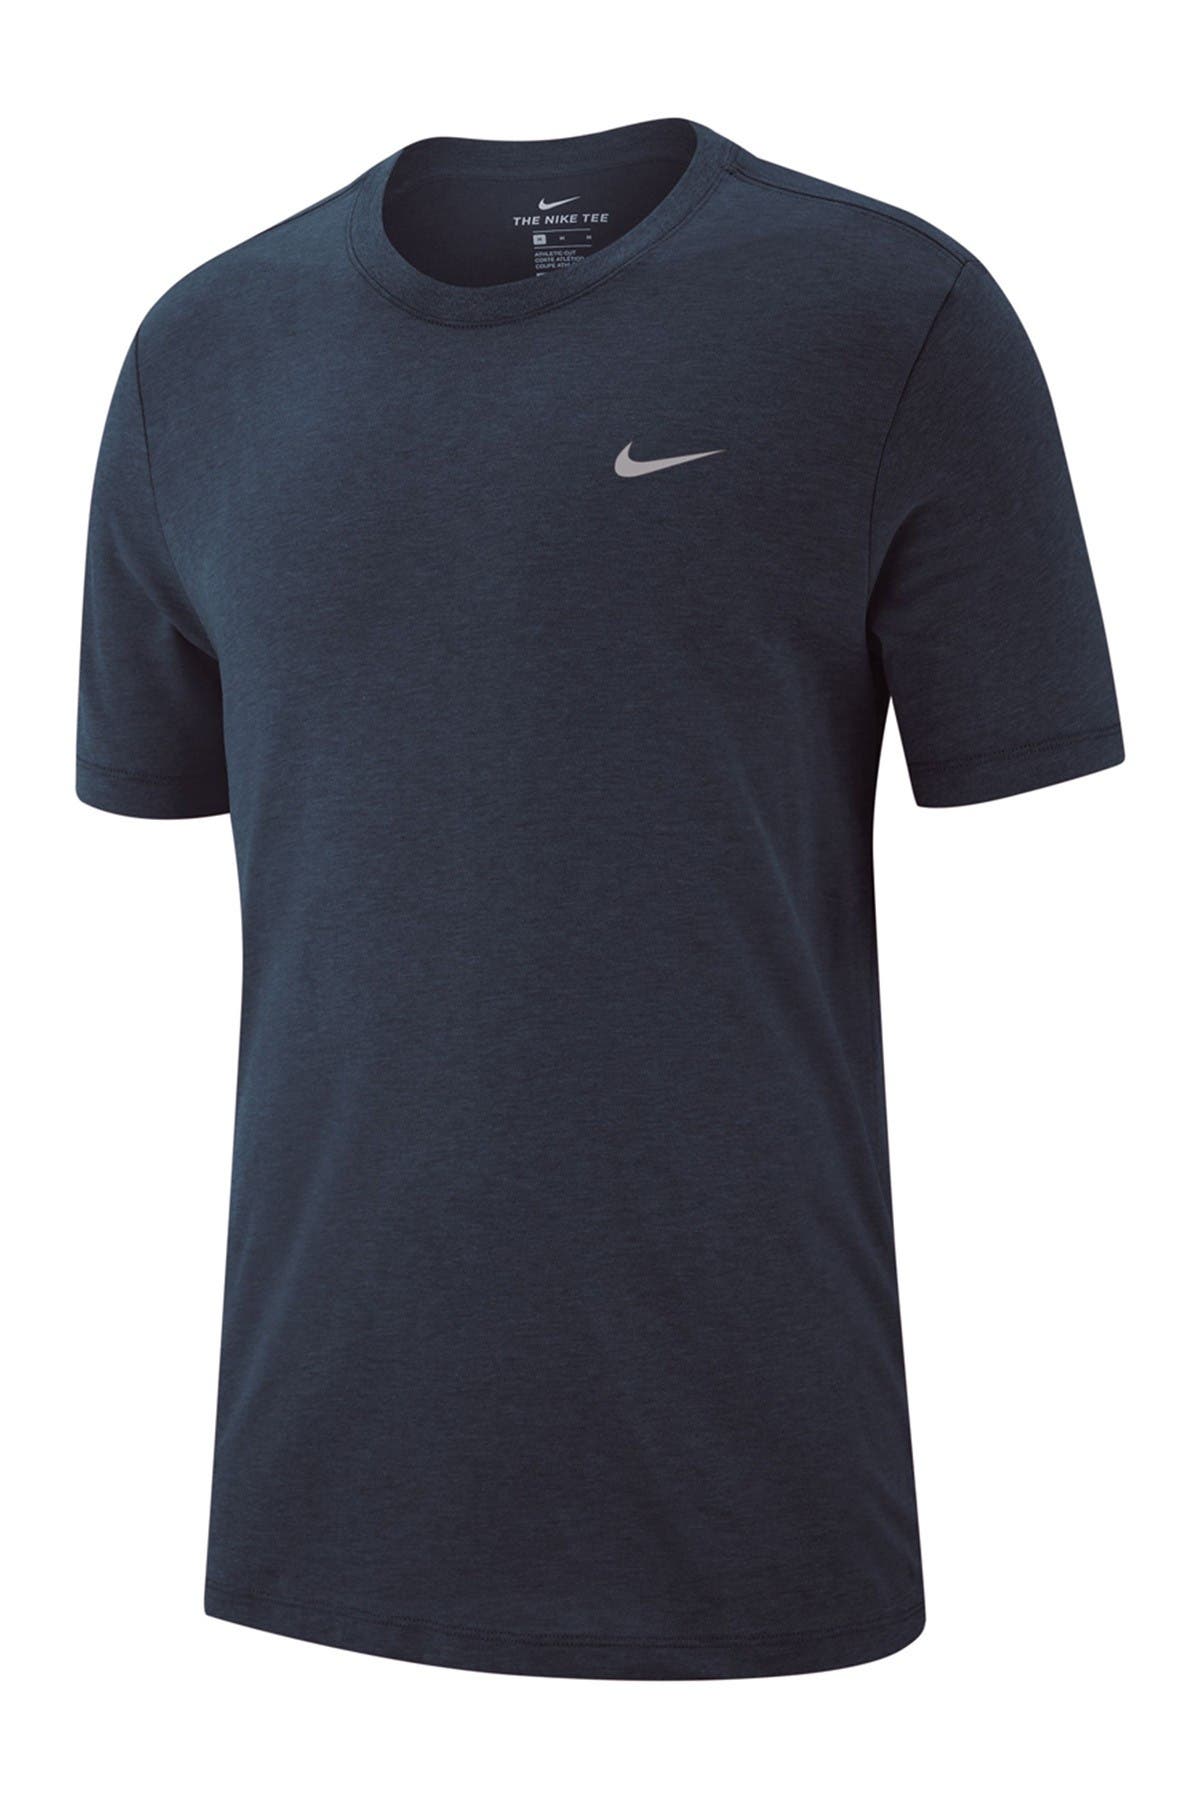 Nike | Dri-FIT Crew Training T-Shirt 